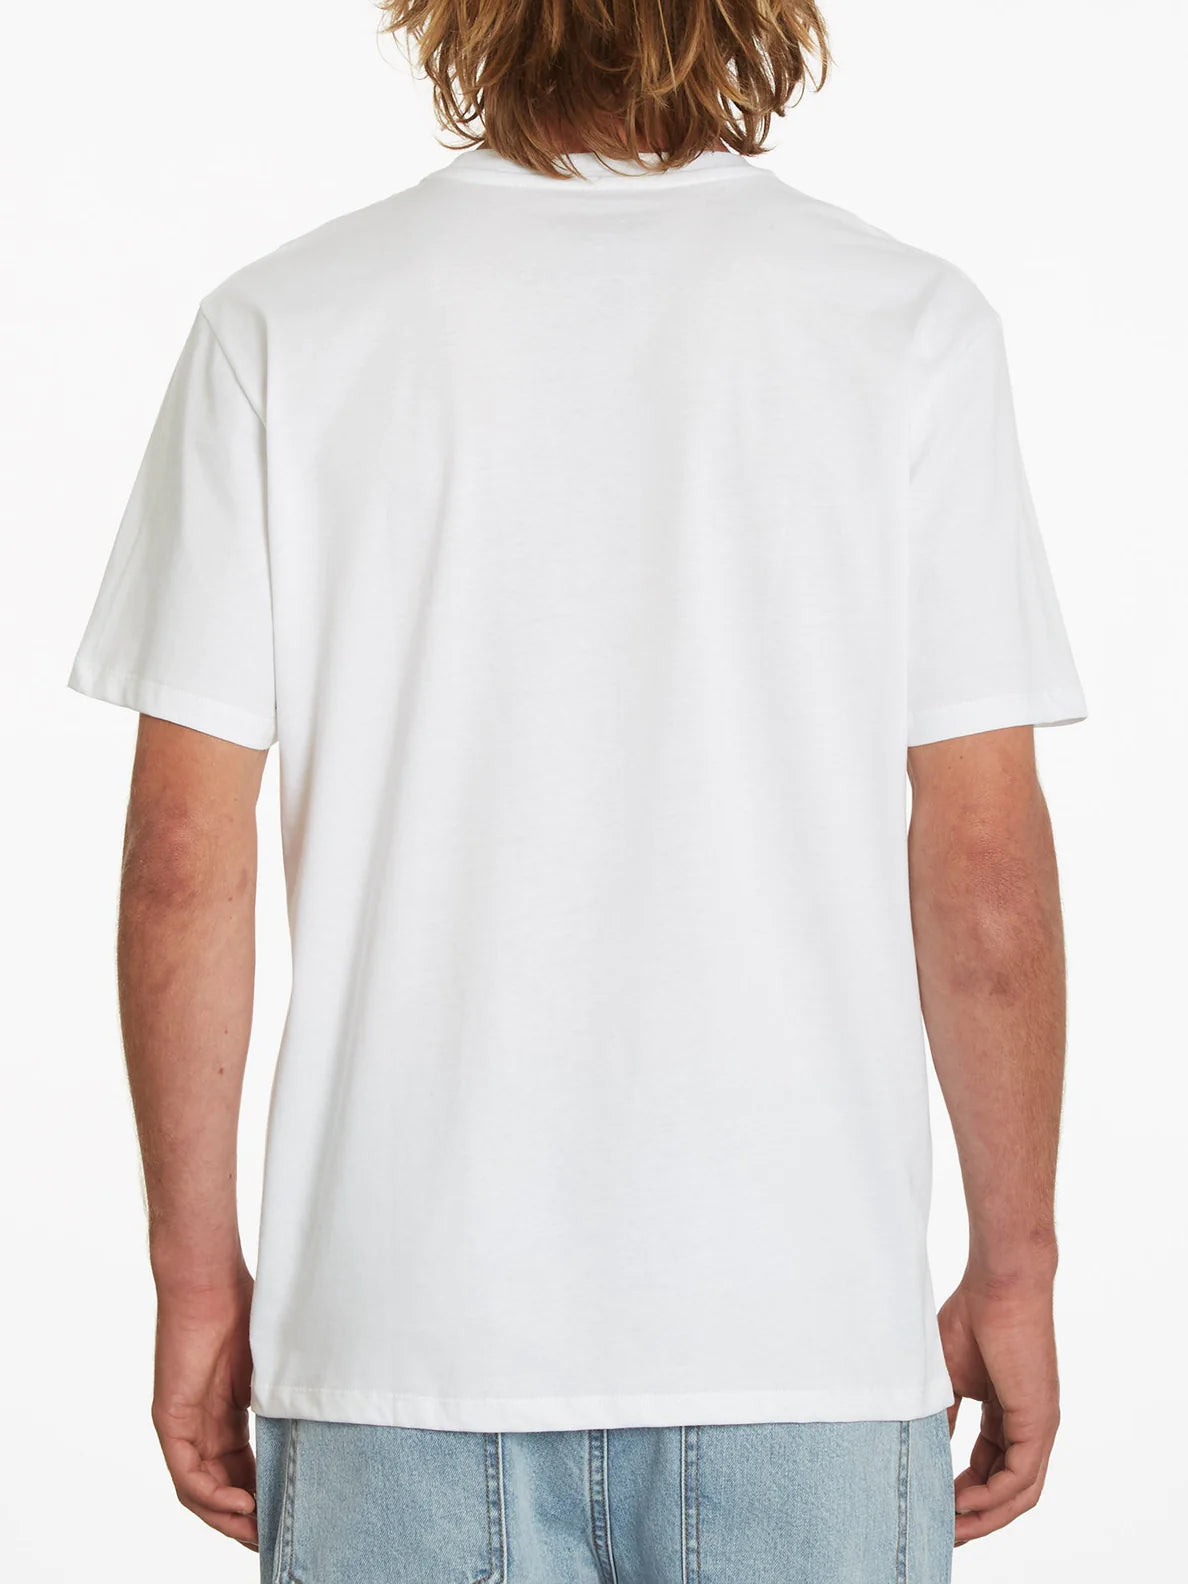 Camiseta Volcom Preacher White